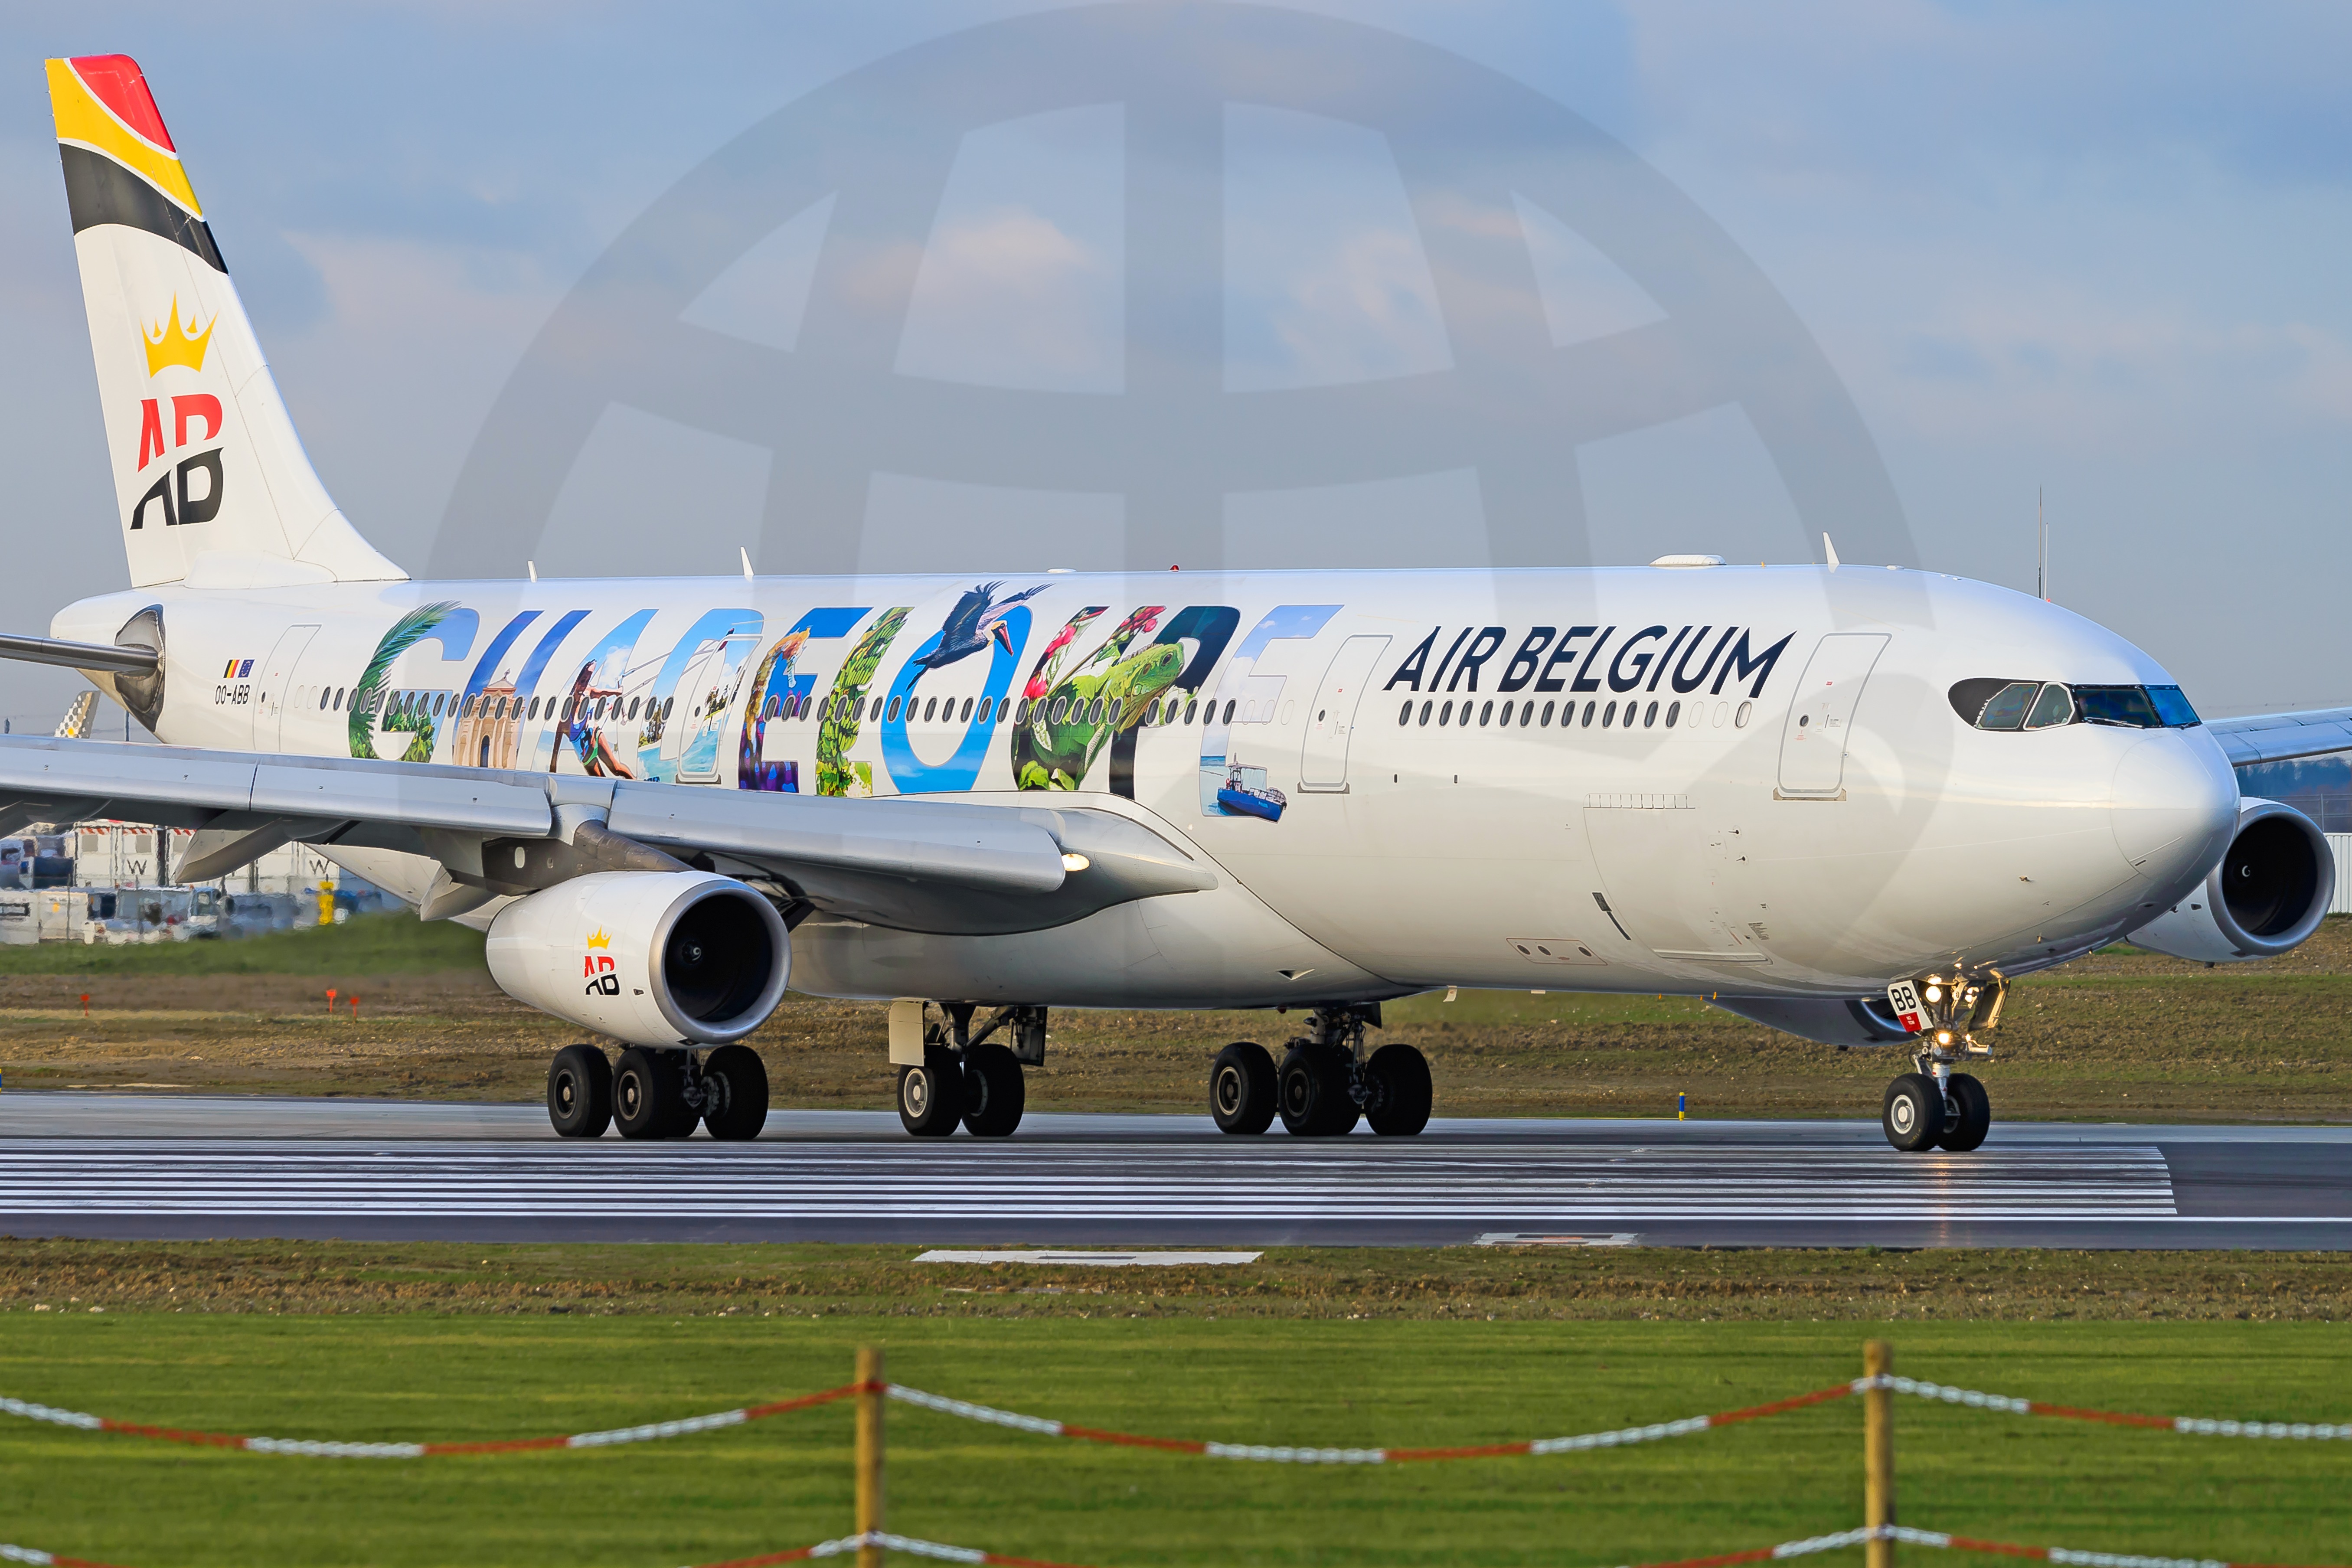 Photo of OO-ABB - Air Belgium Airbus A340-300 by 